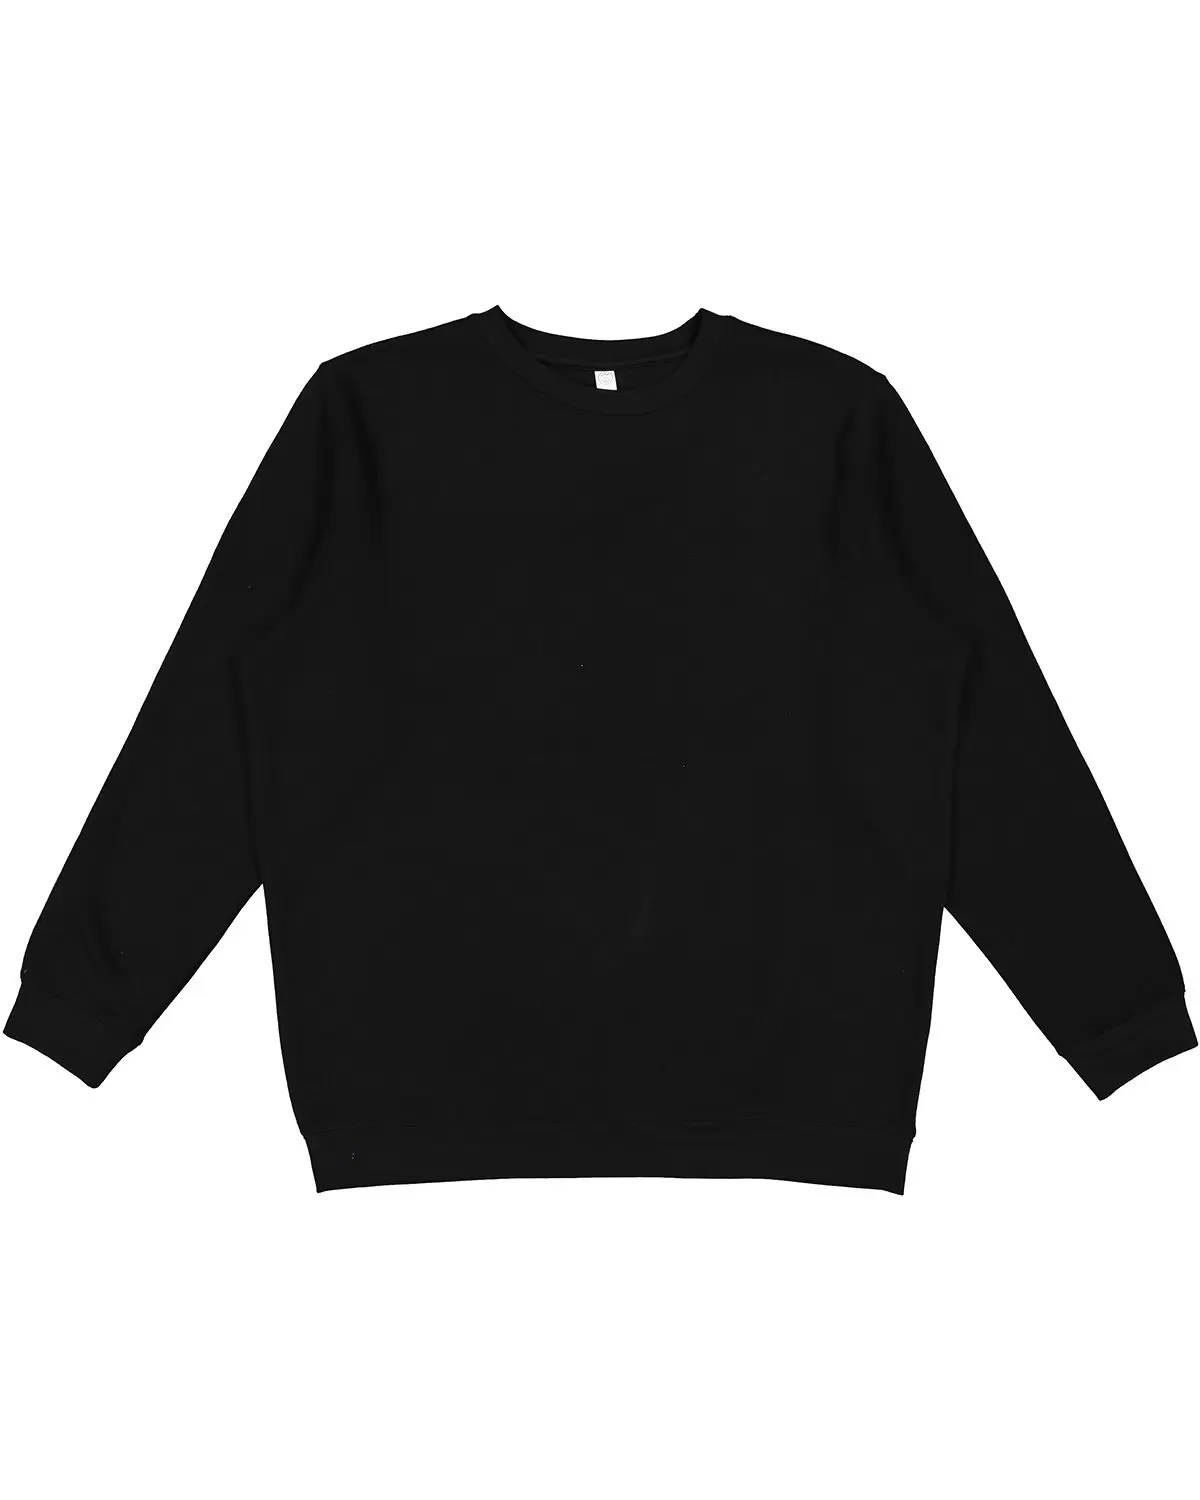 LA T 6925 Unisex Eleveated Fleece Sweatshirt - From $14.37